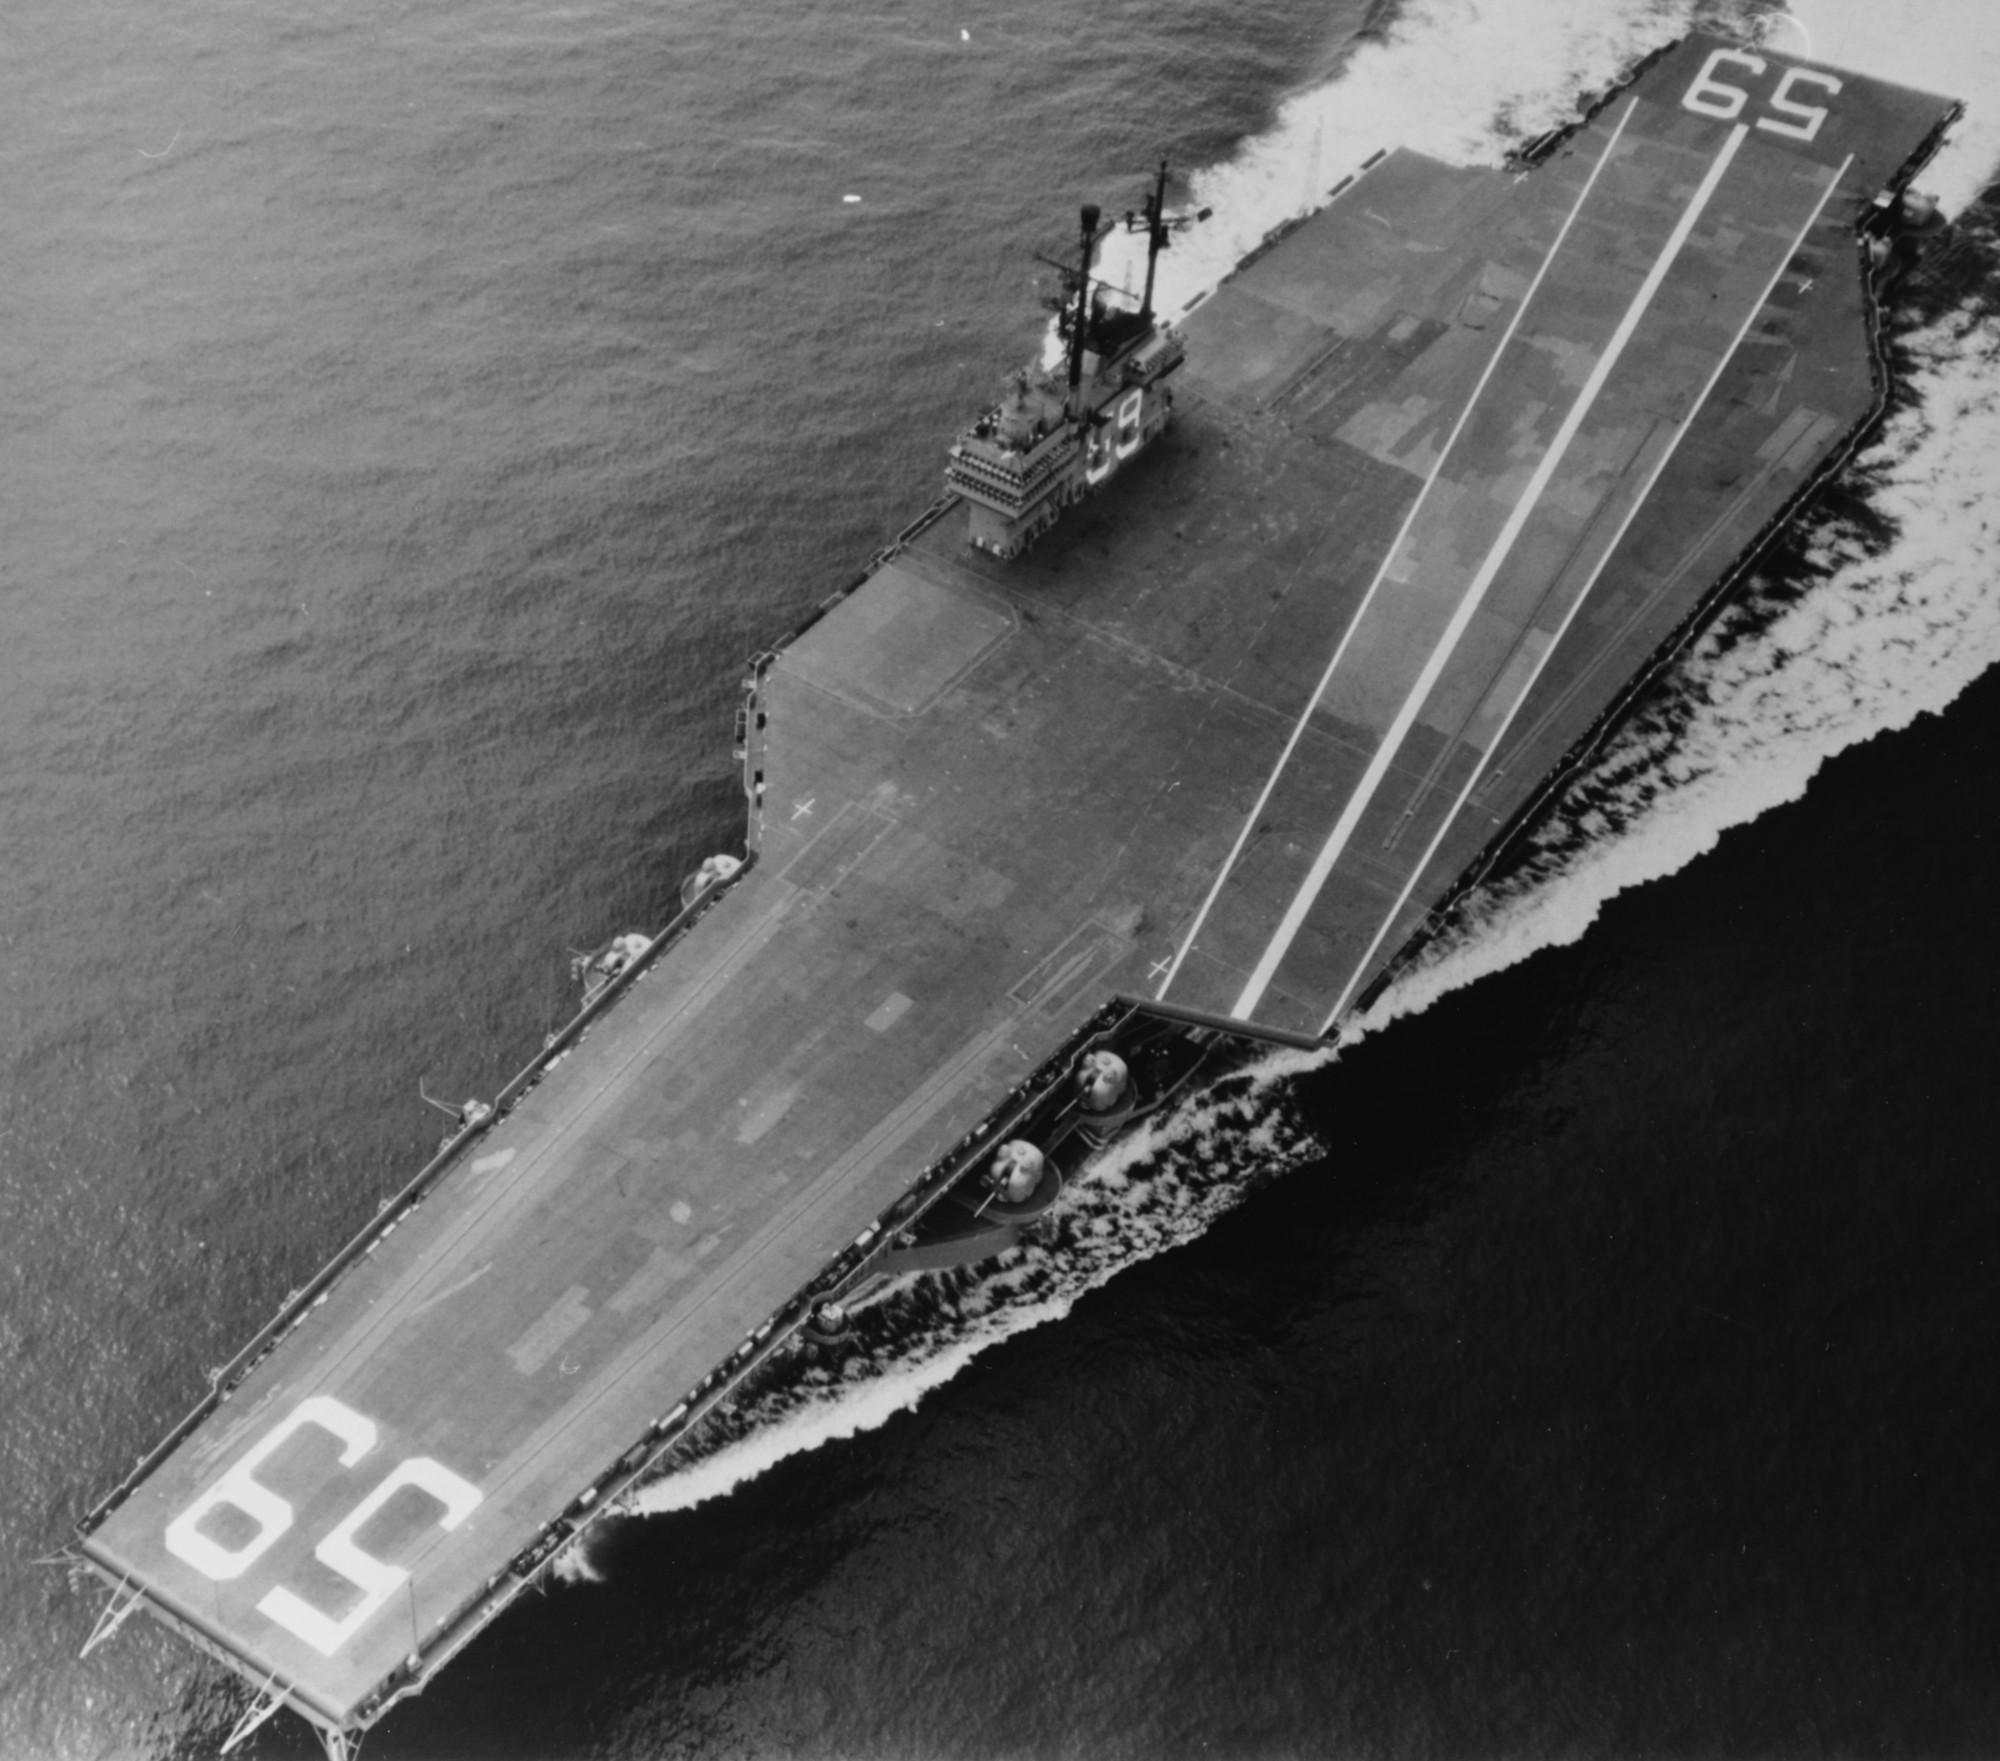 cv-59 uss forrestal aircraft carrier us navy trials 1955 26